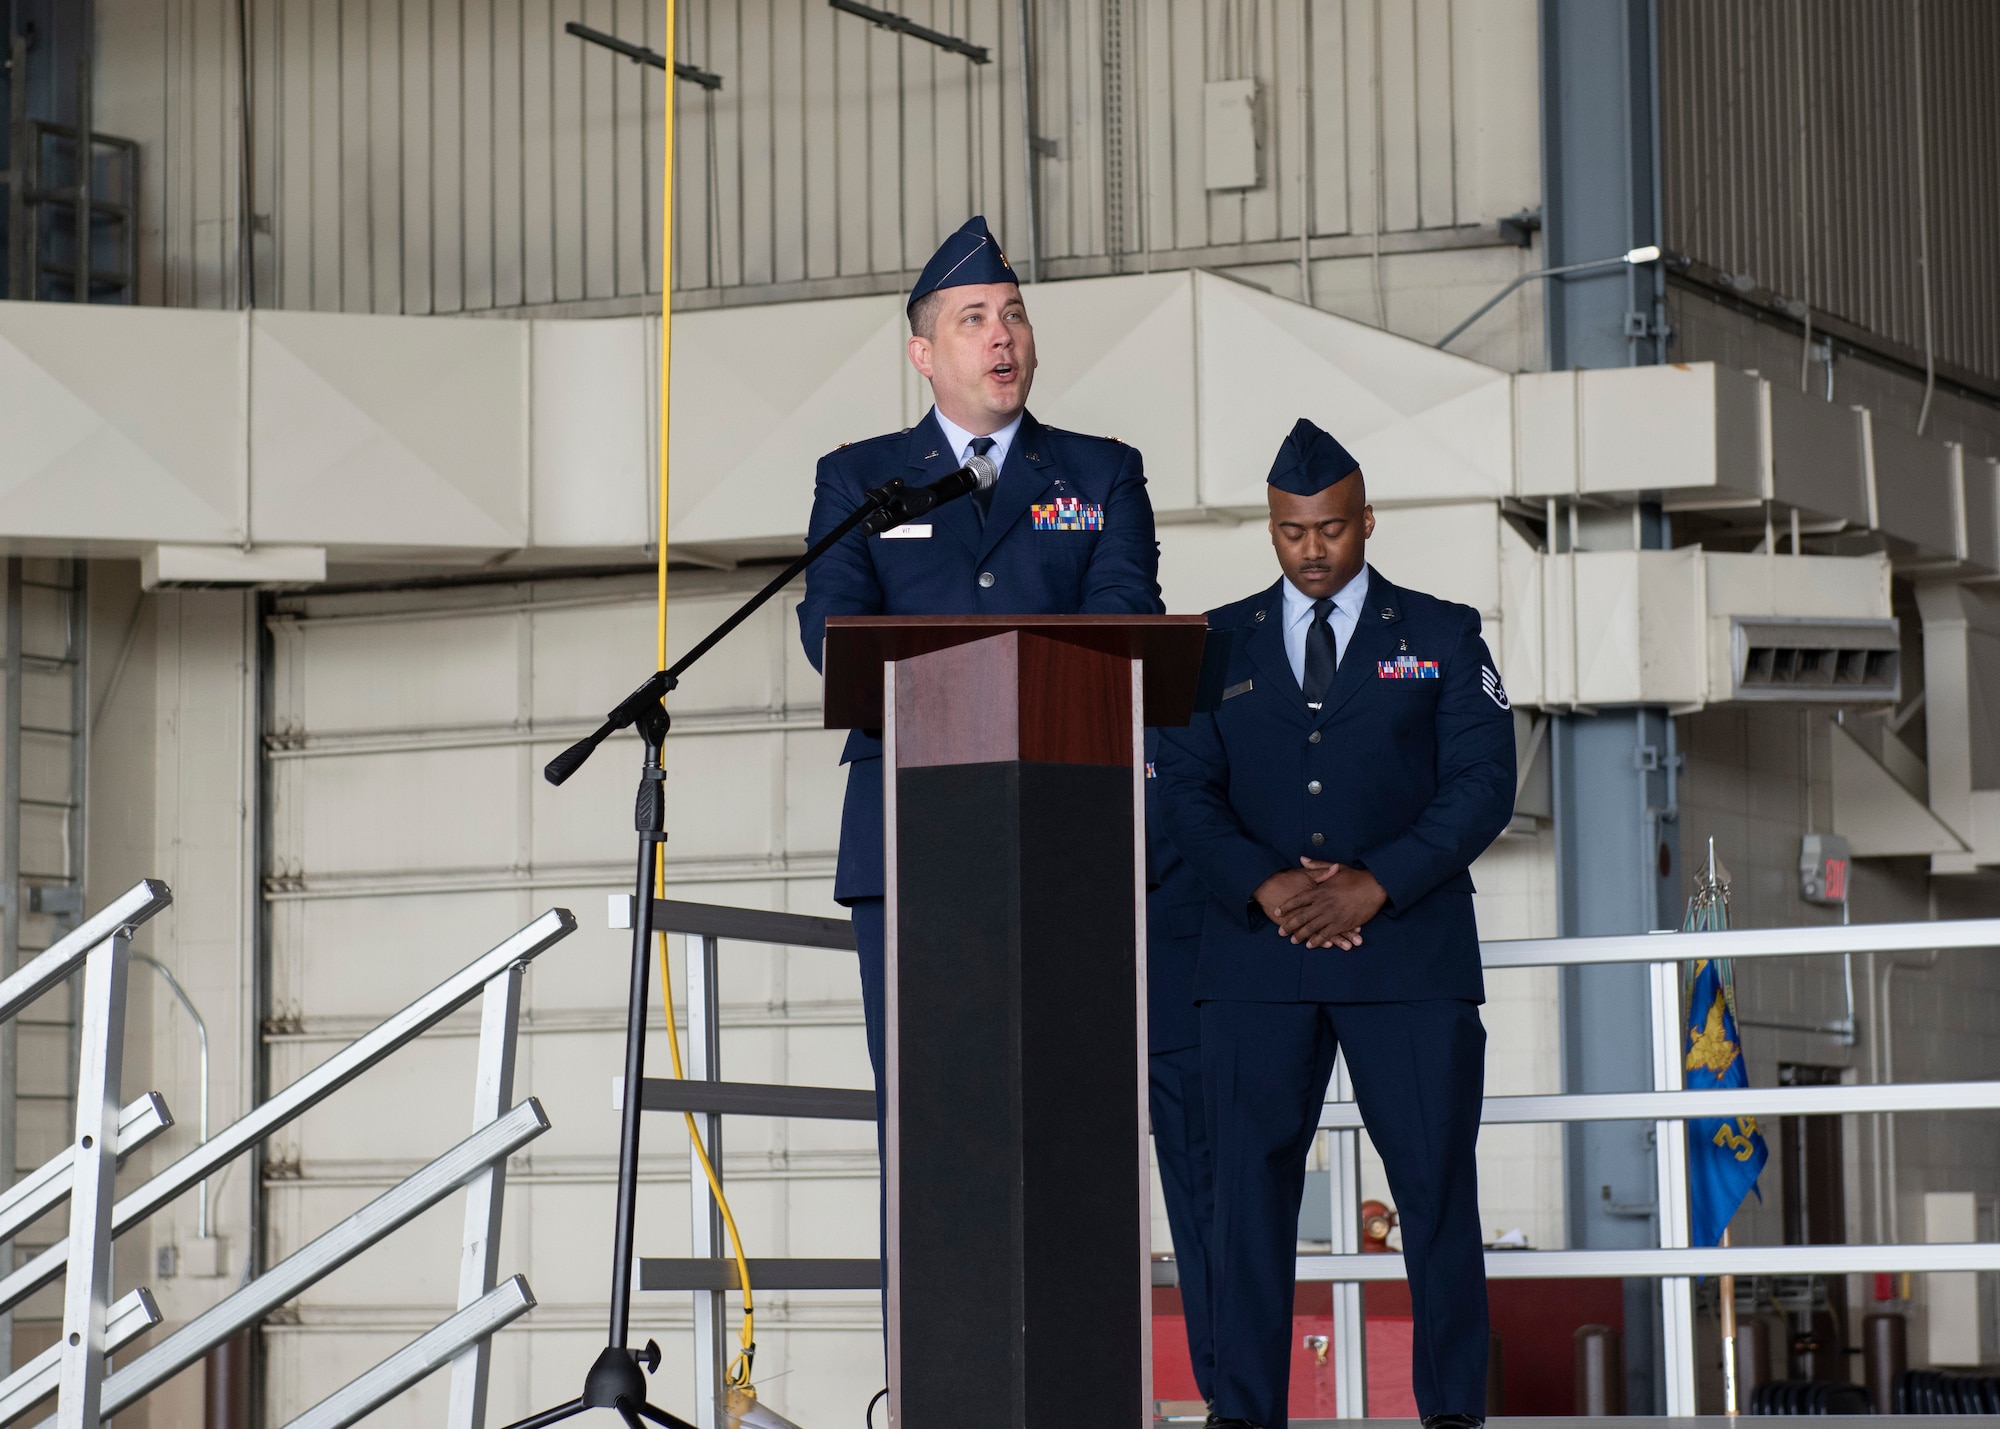 A man in a blue uniform speaks at a podium.